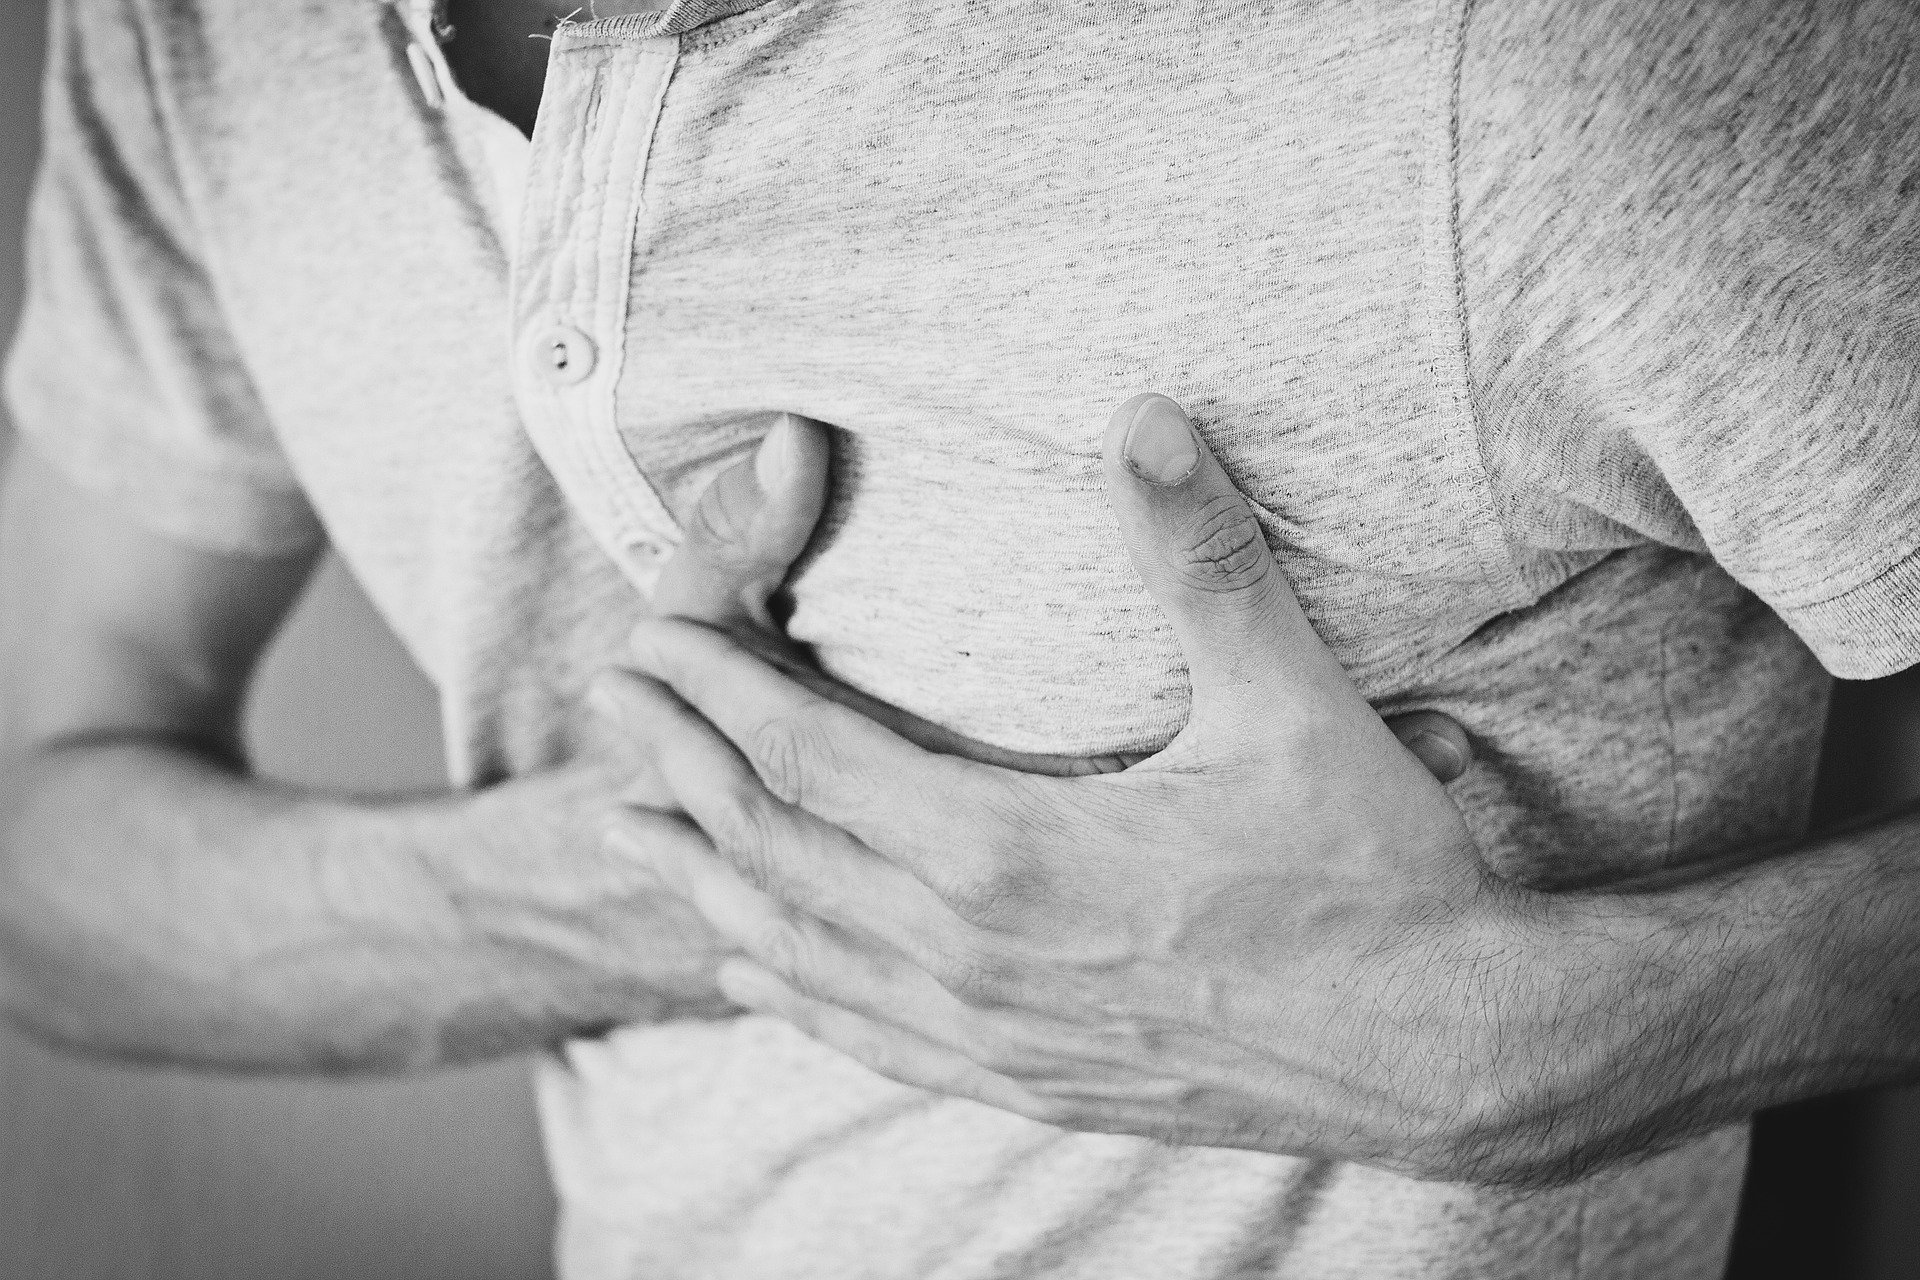 7 Kebiasaan Buruk yang Dapat Merusak Jantung